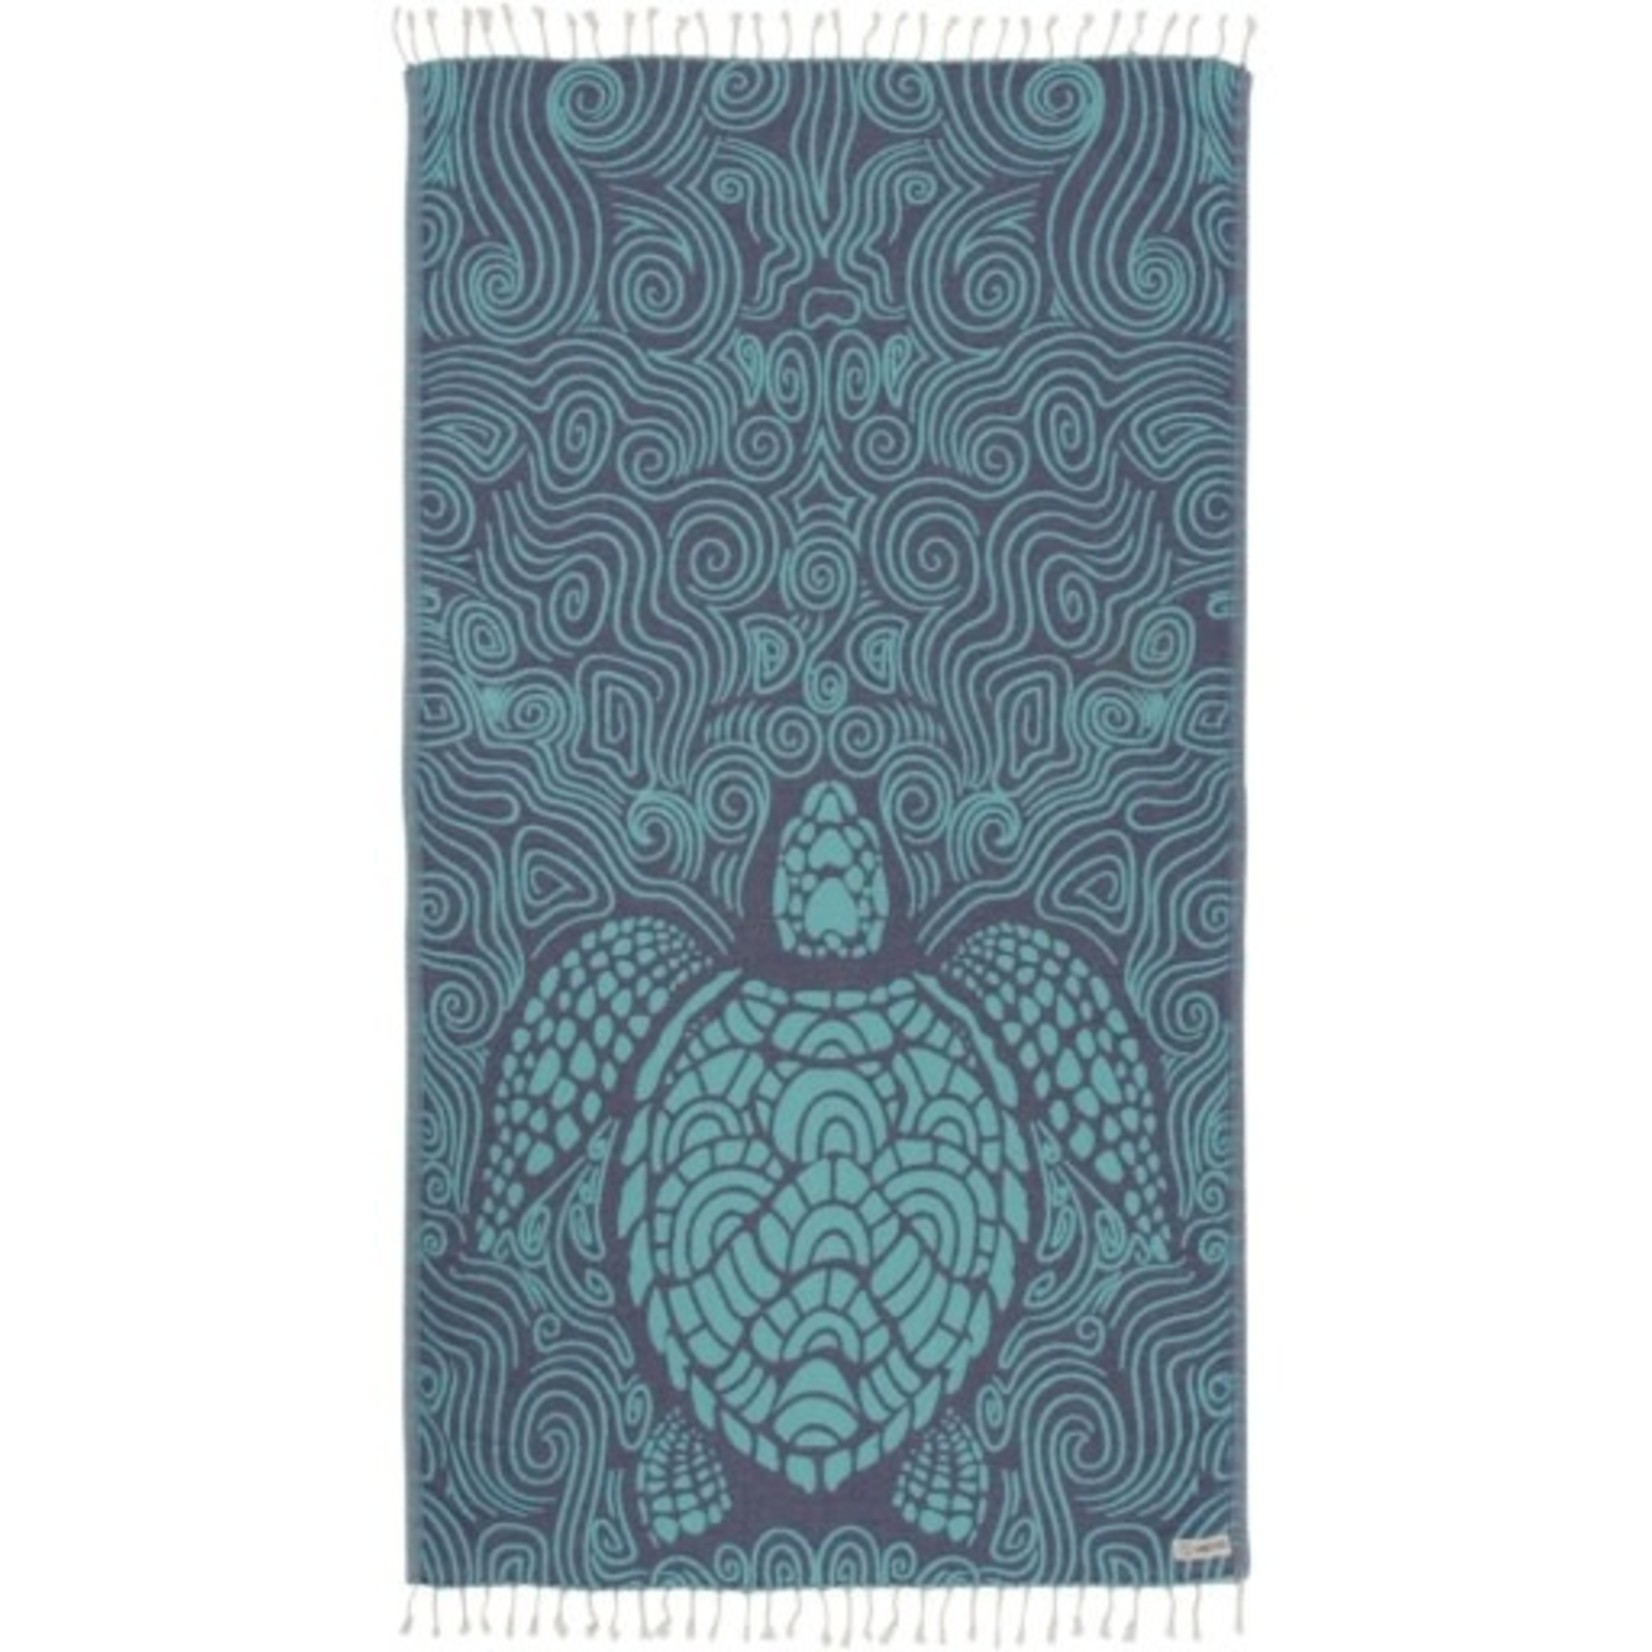 Sand Cloud Mint Swirl Turtle Towel - Regular